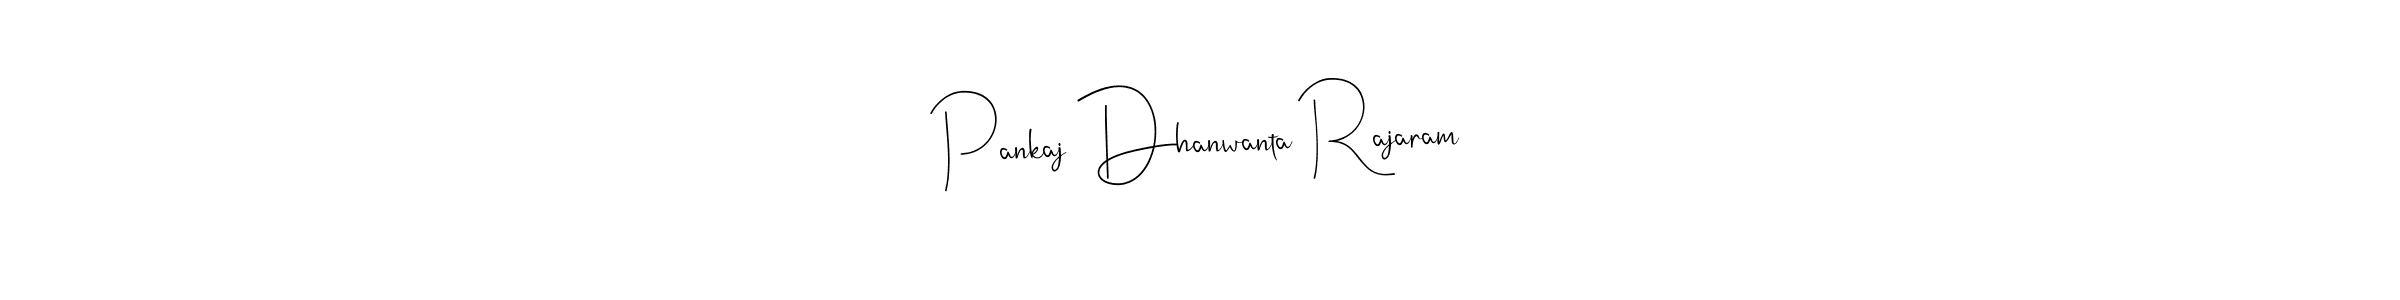 How to Draw Pankaj Dhanwanta Rajaram signature style? Andilay-7BmLP is a latest design signature styles for name Pankaj Dhanwanta Rajaram. Pankaj Dhanwanta Rajaram signature style 4 images and pictures png